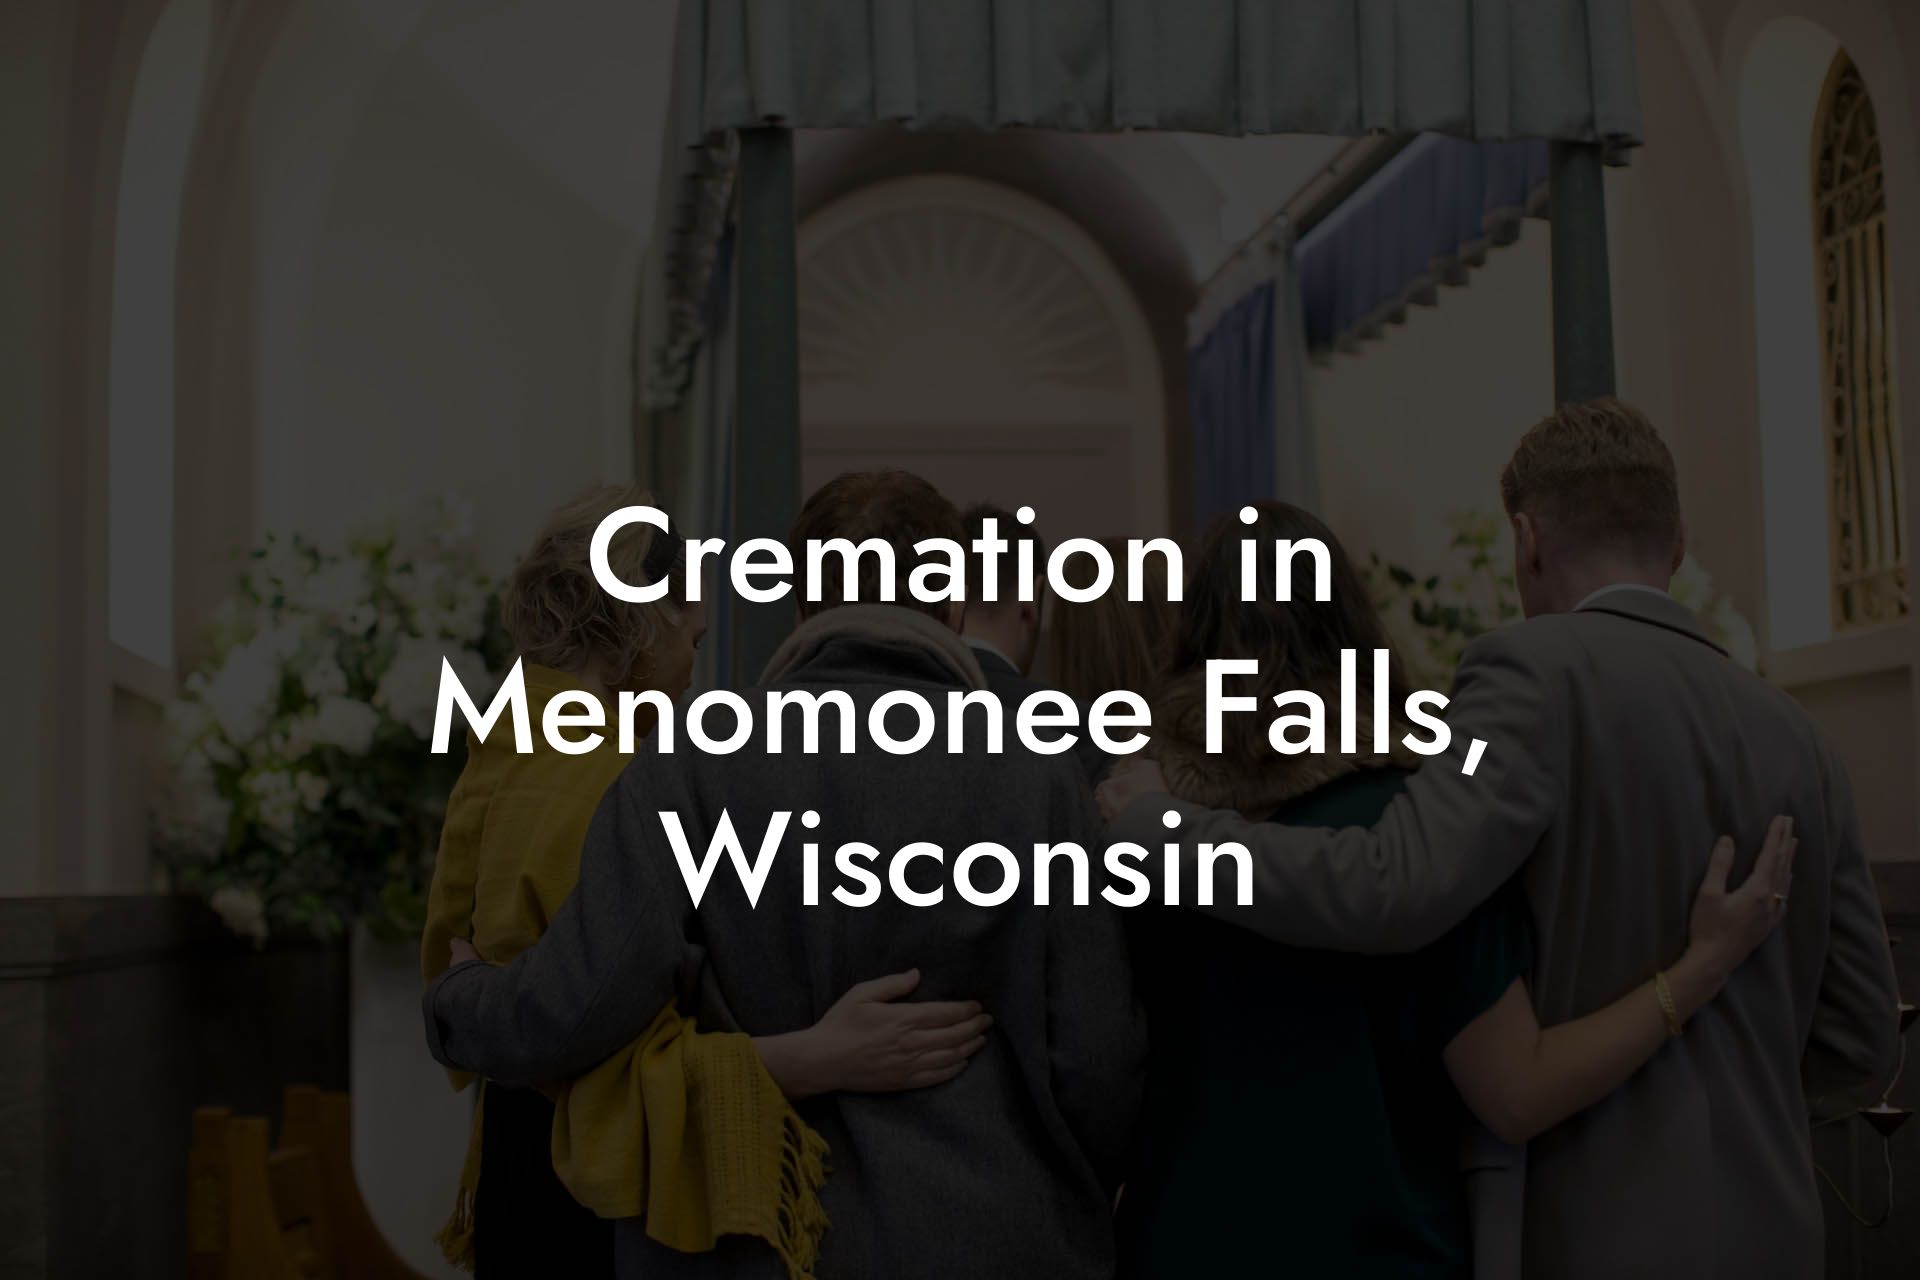 Cremation in Menomonee Falls, Wisconsin